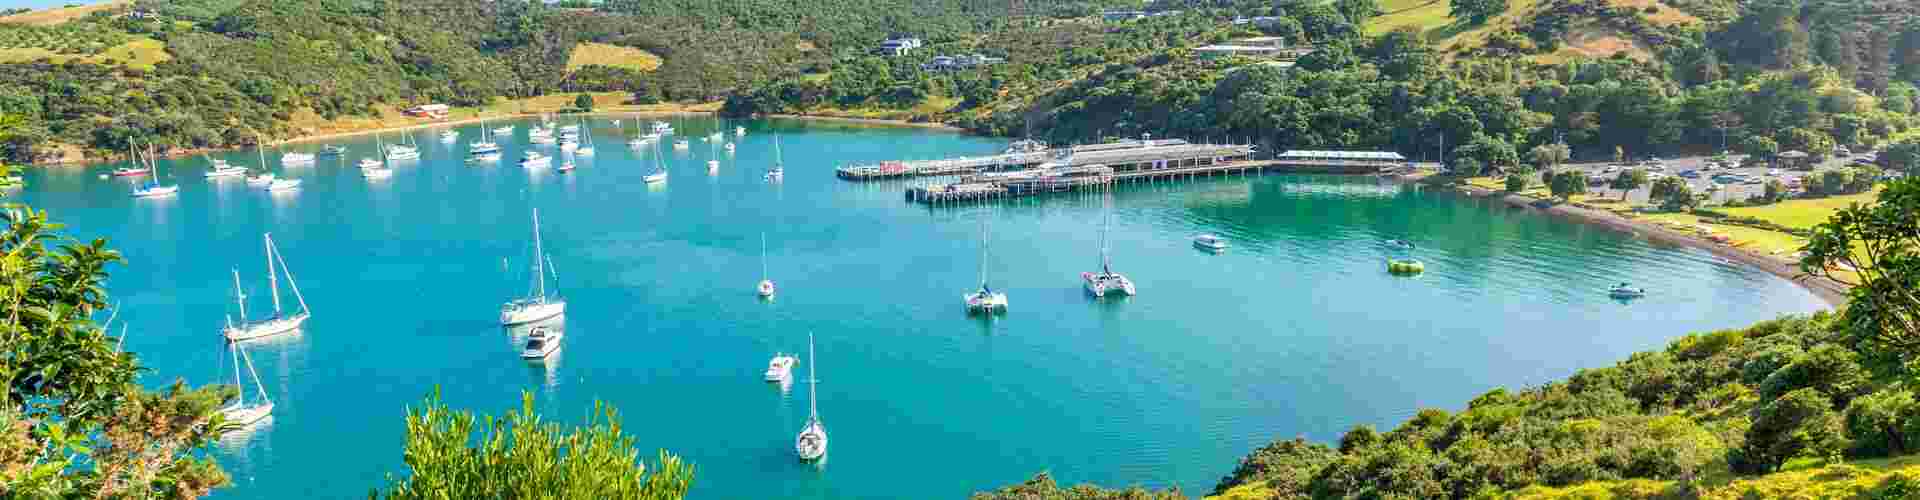 turquoise waters at waiheke island new zealand